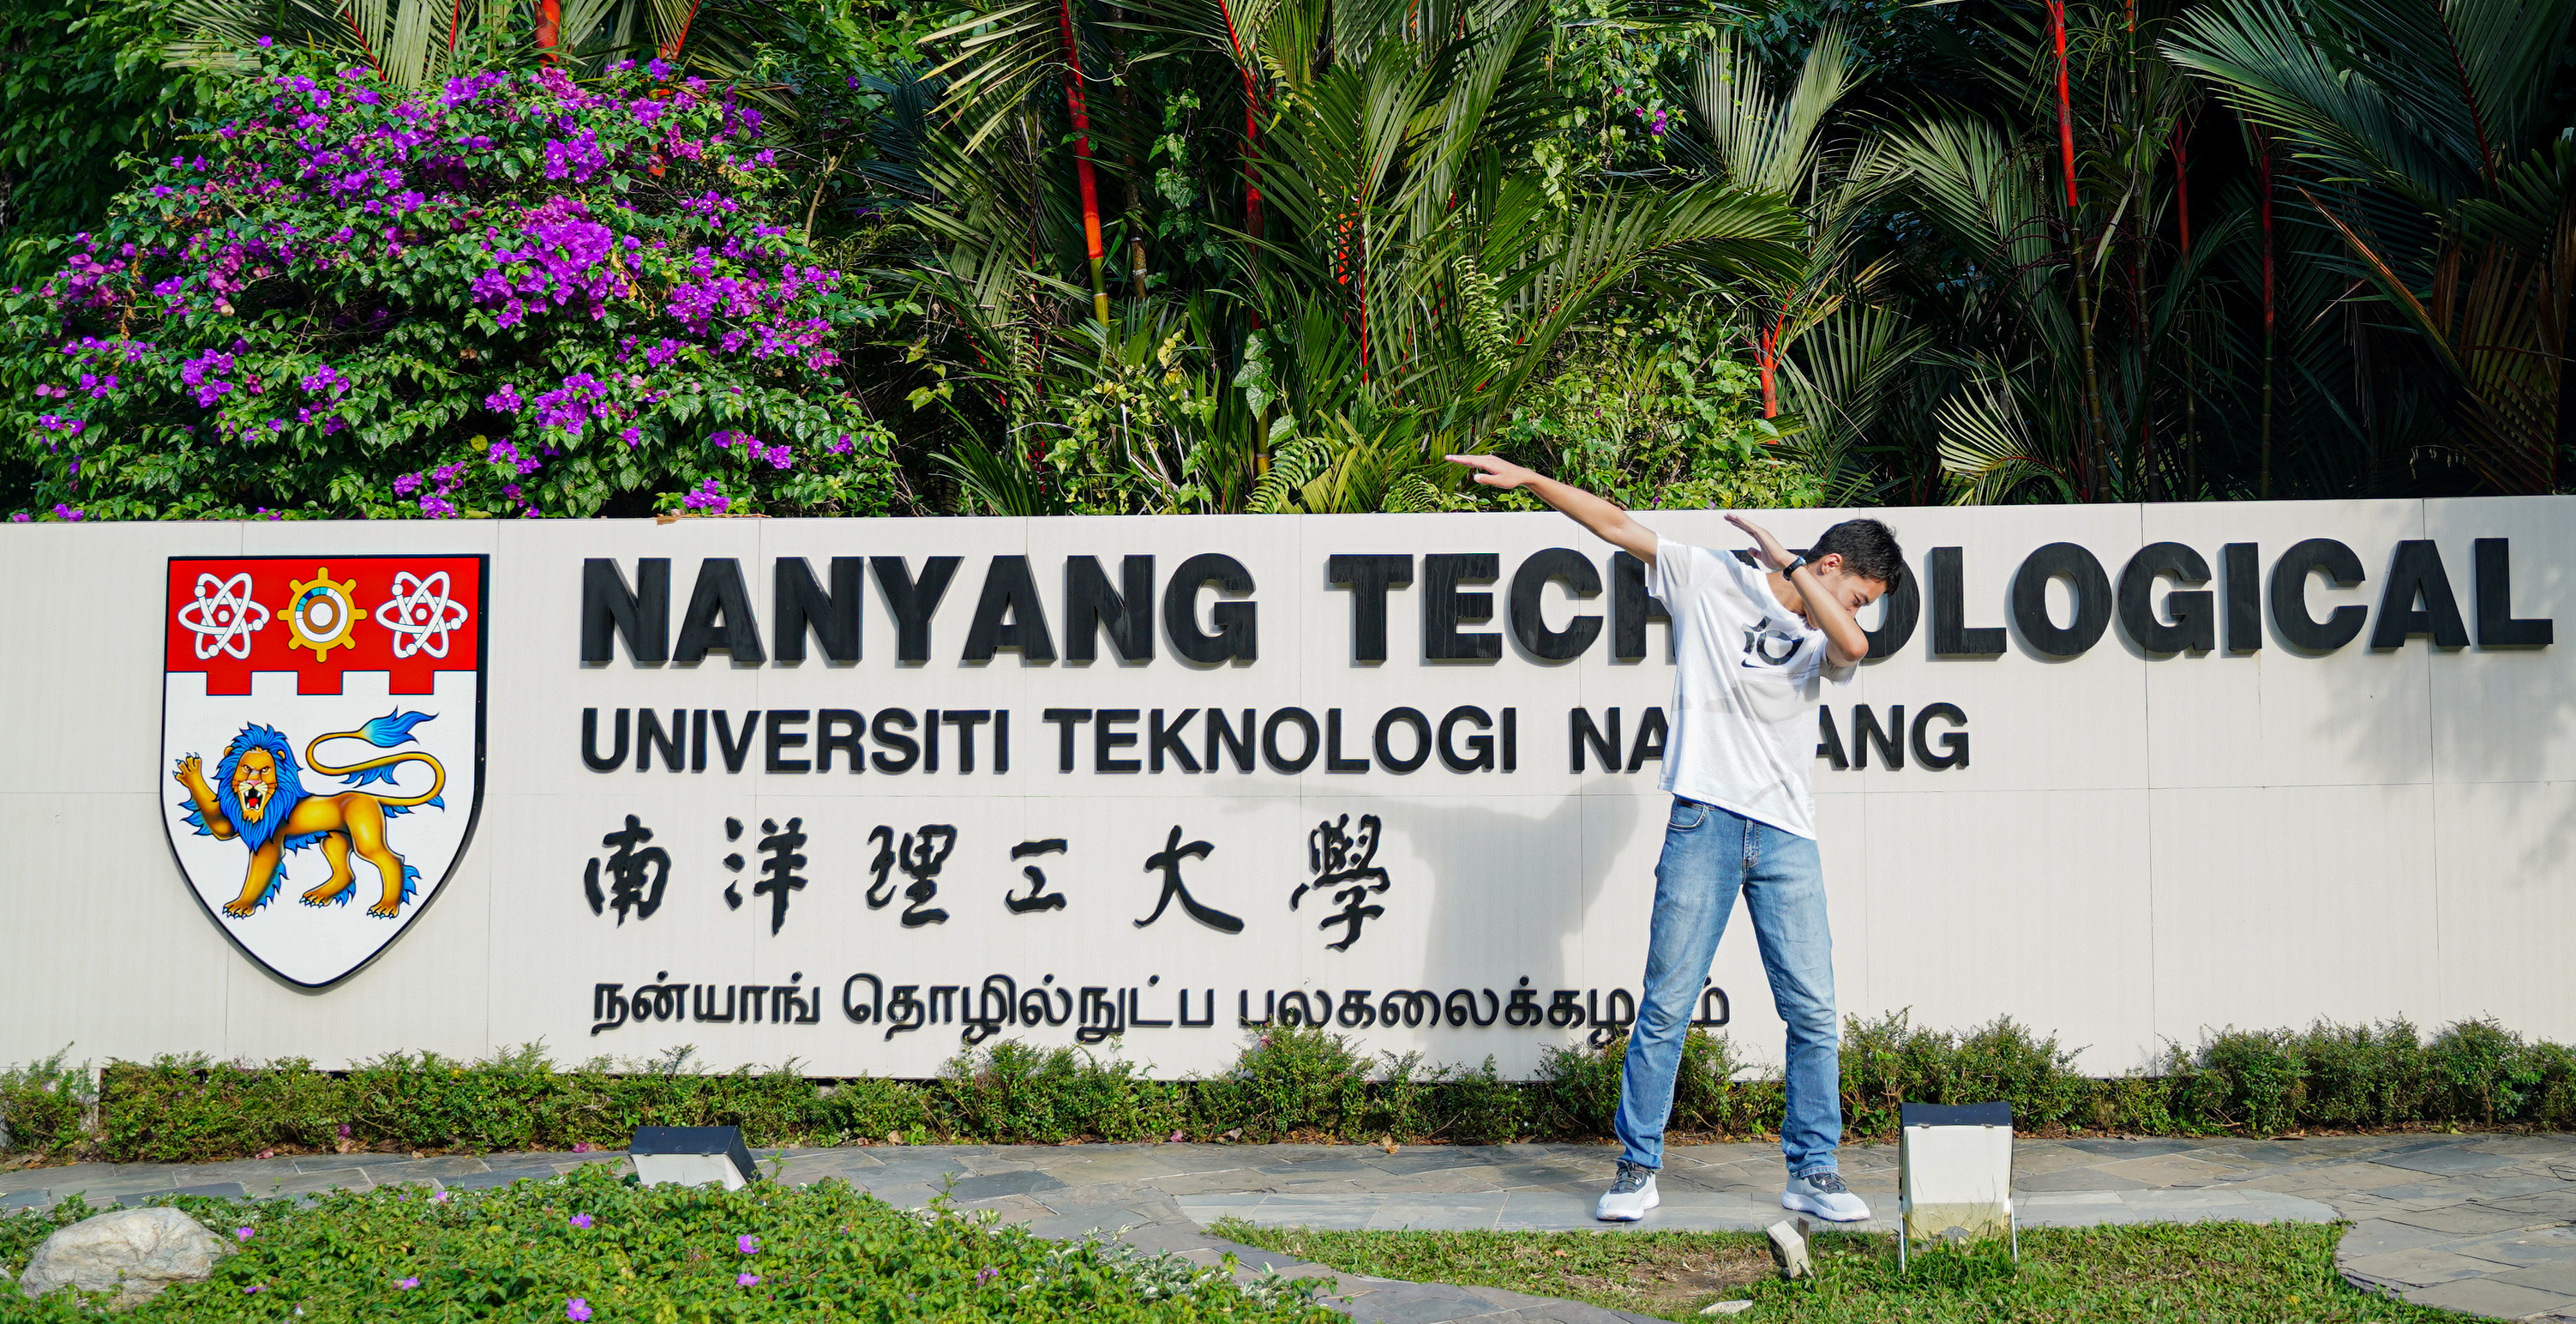 LIU_Bing_Nanyang Technological University